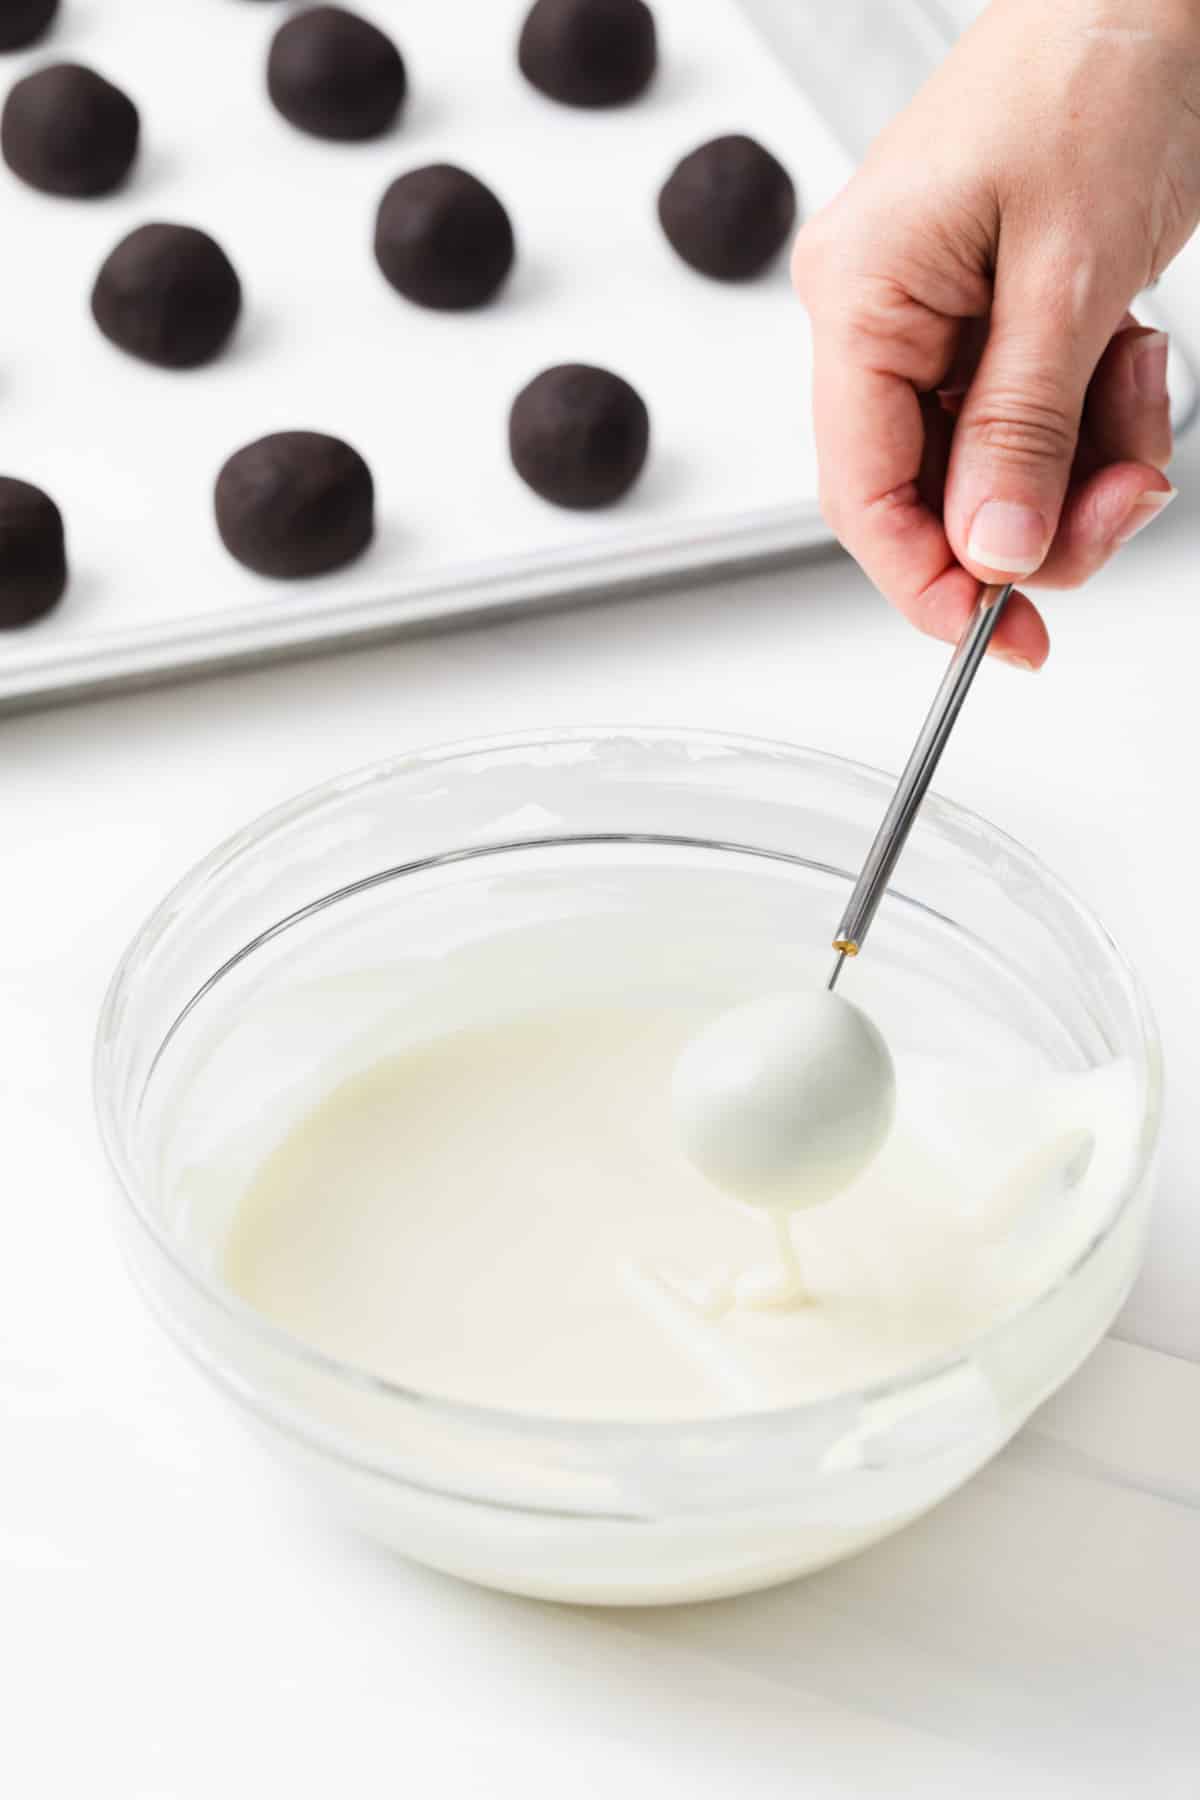 Oreo ball dipped in white chocolate.